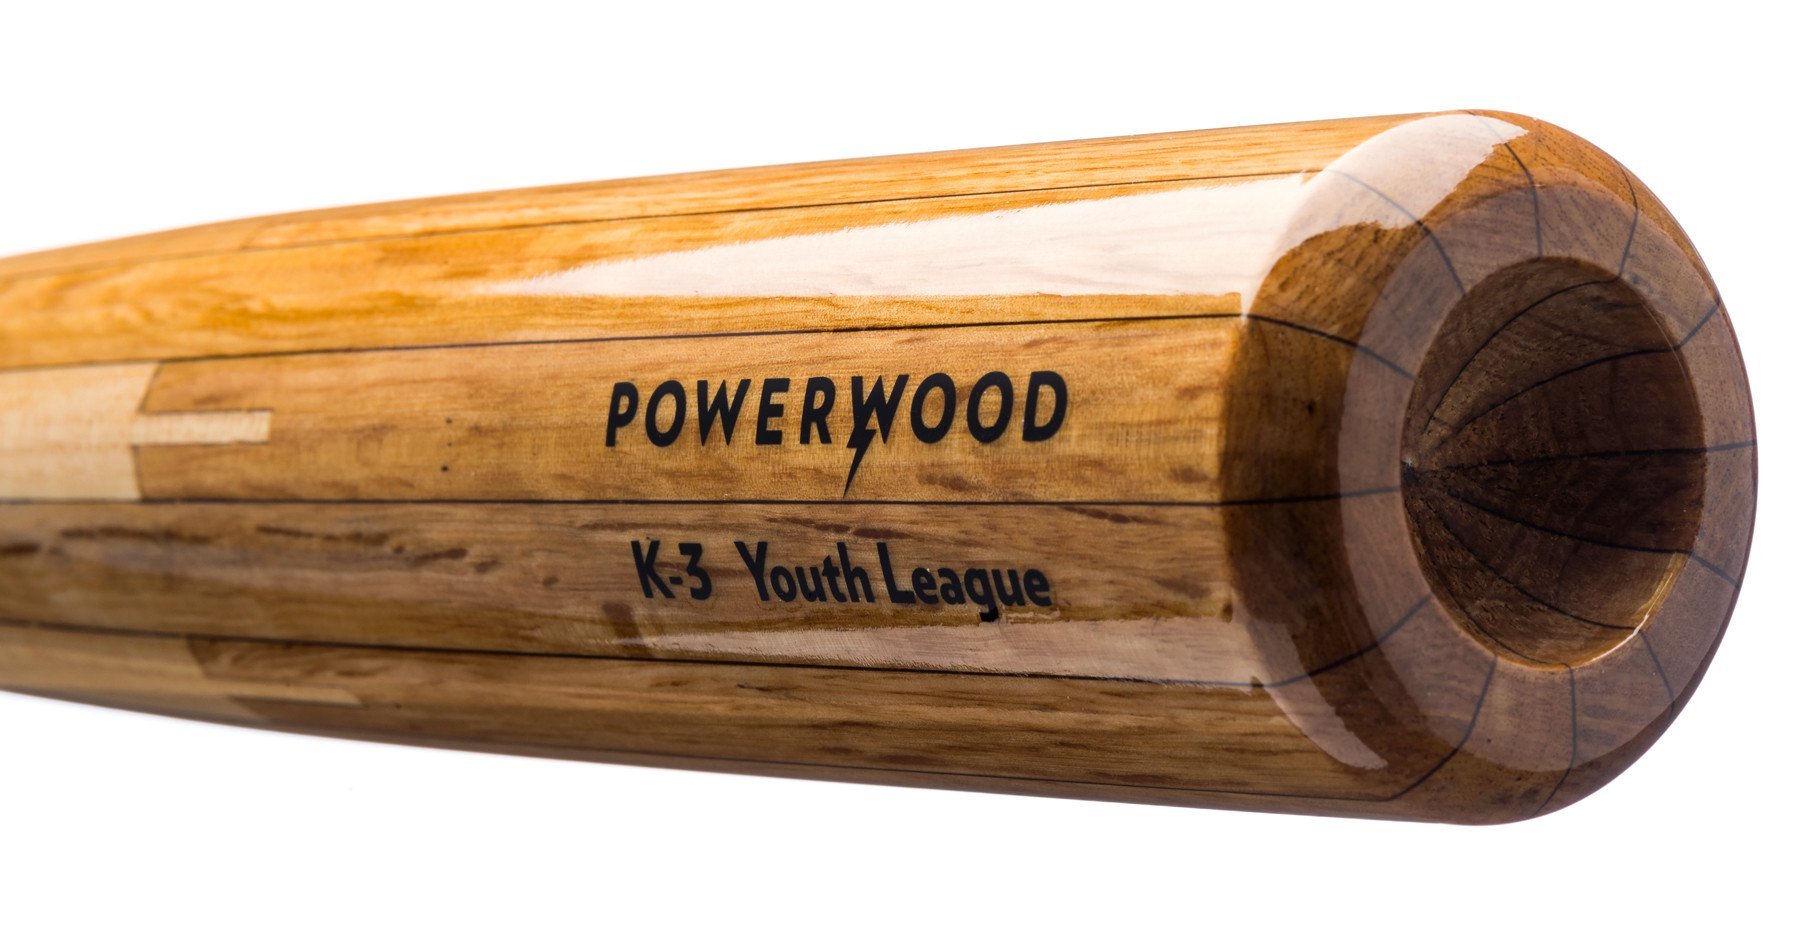 Powerwood K-3 Youth Wood Baseball Bat - MacDougall Bats